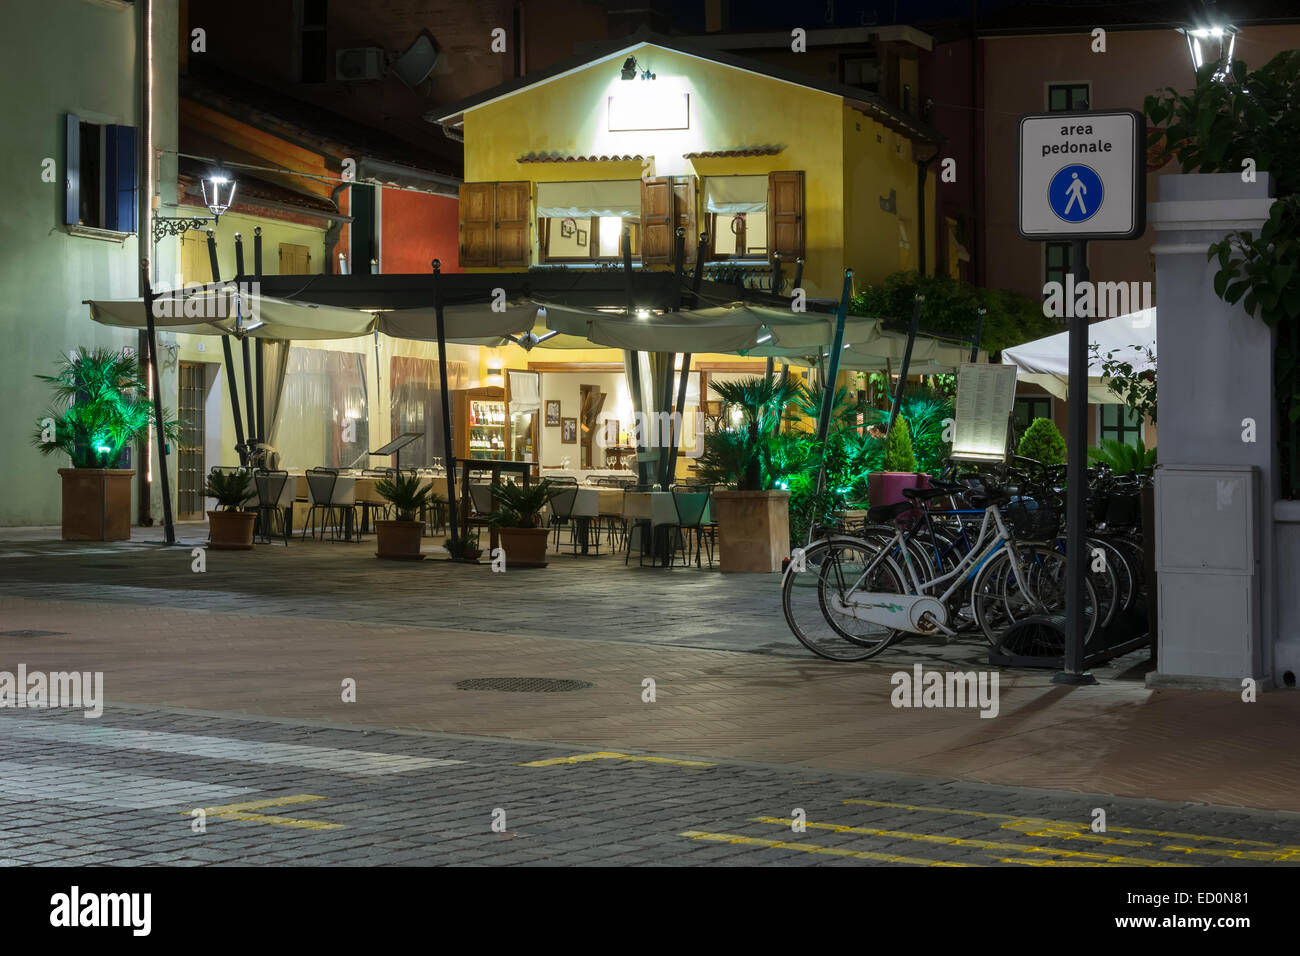 Typical Italian restaurant on Adriatic coast Caorle, Italy - nighttime view Stock Photo